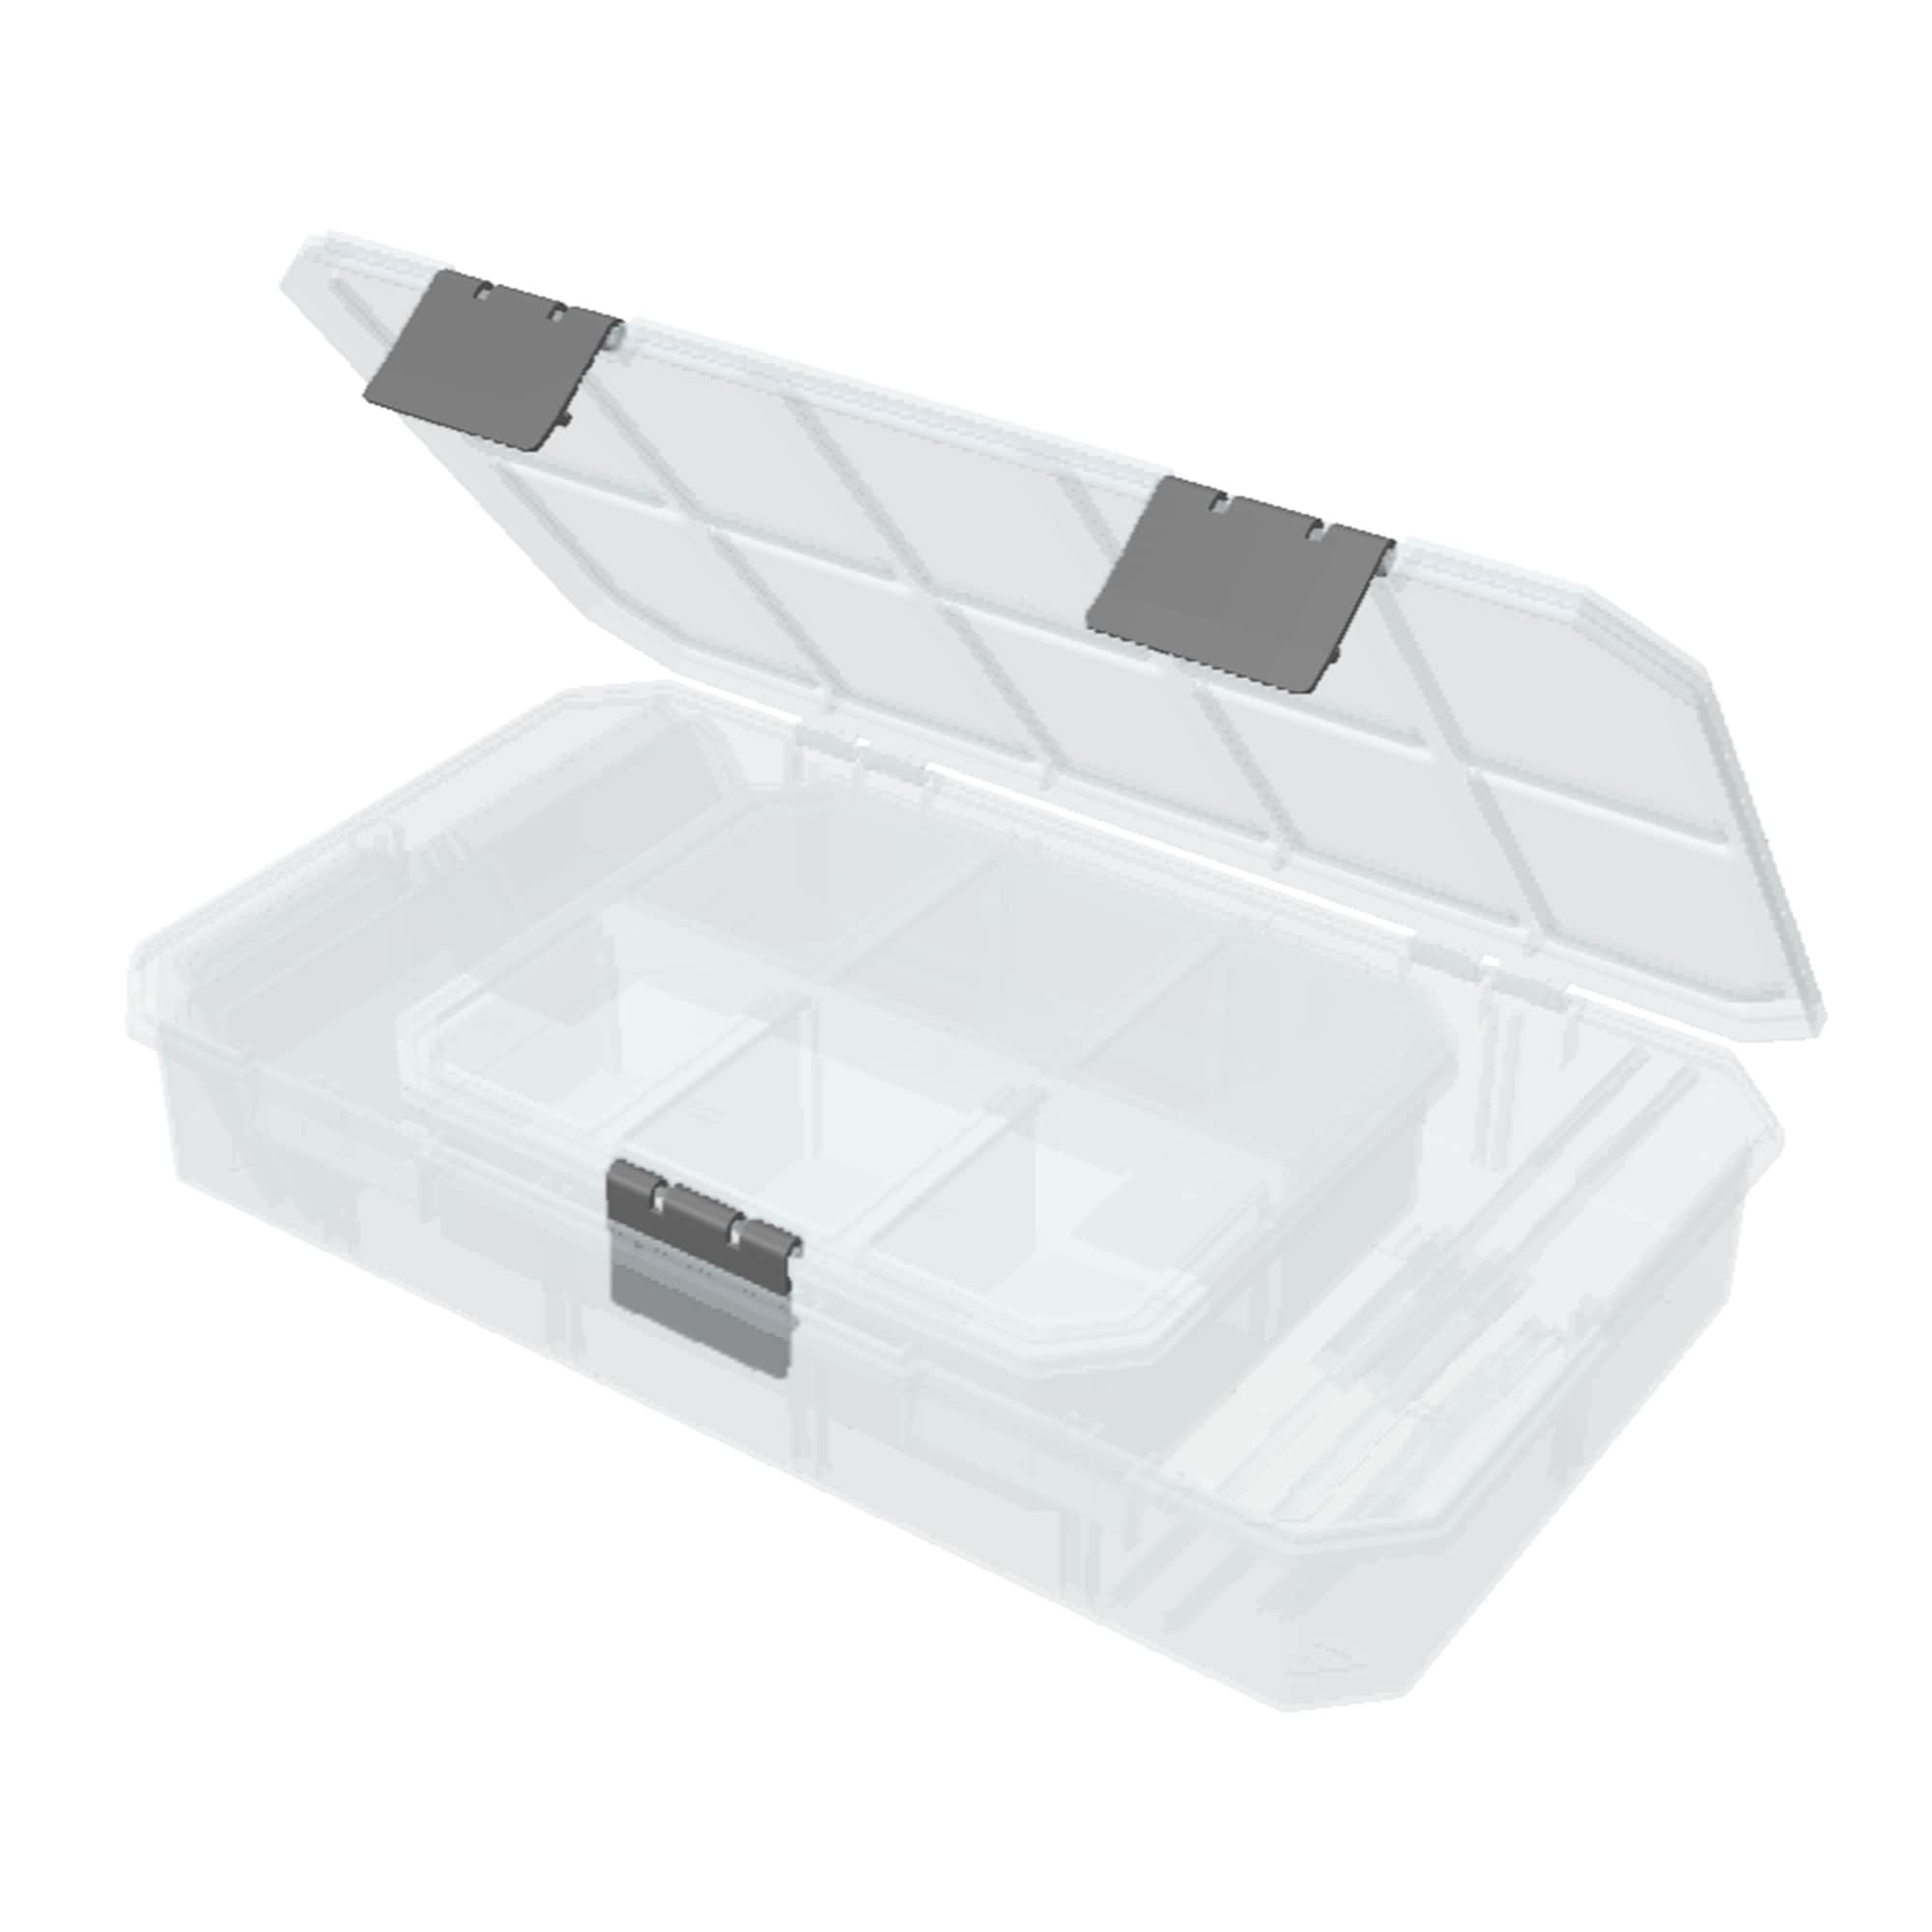 Jigitz Plastic Organizer Box 16 Compartment Plastic Organizer with